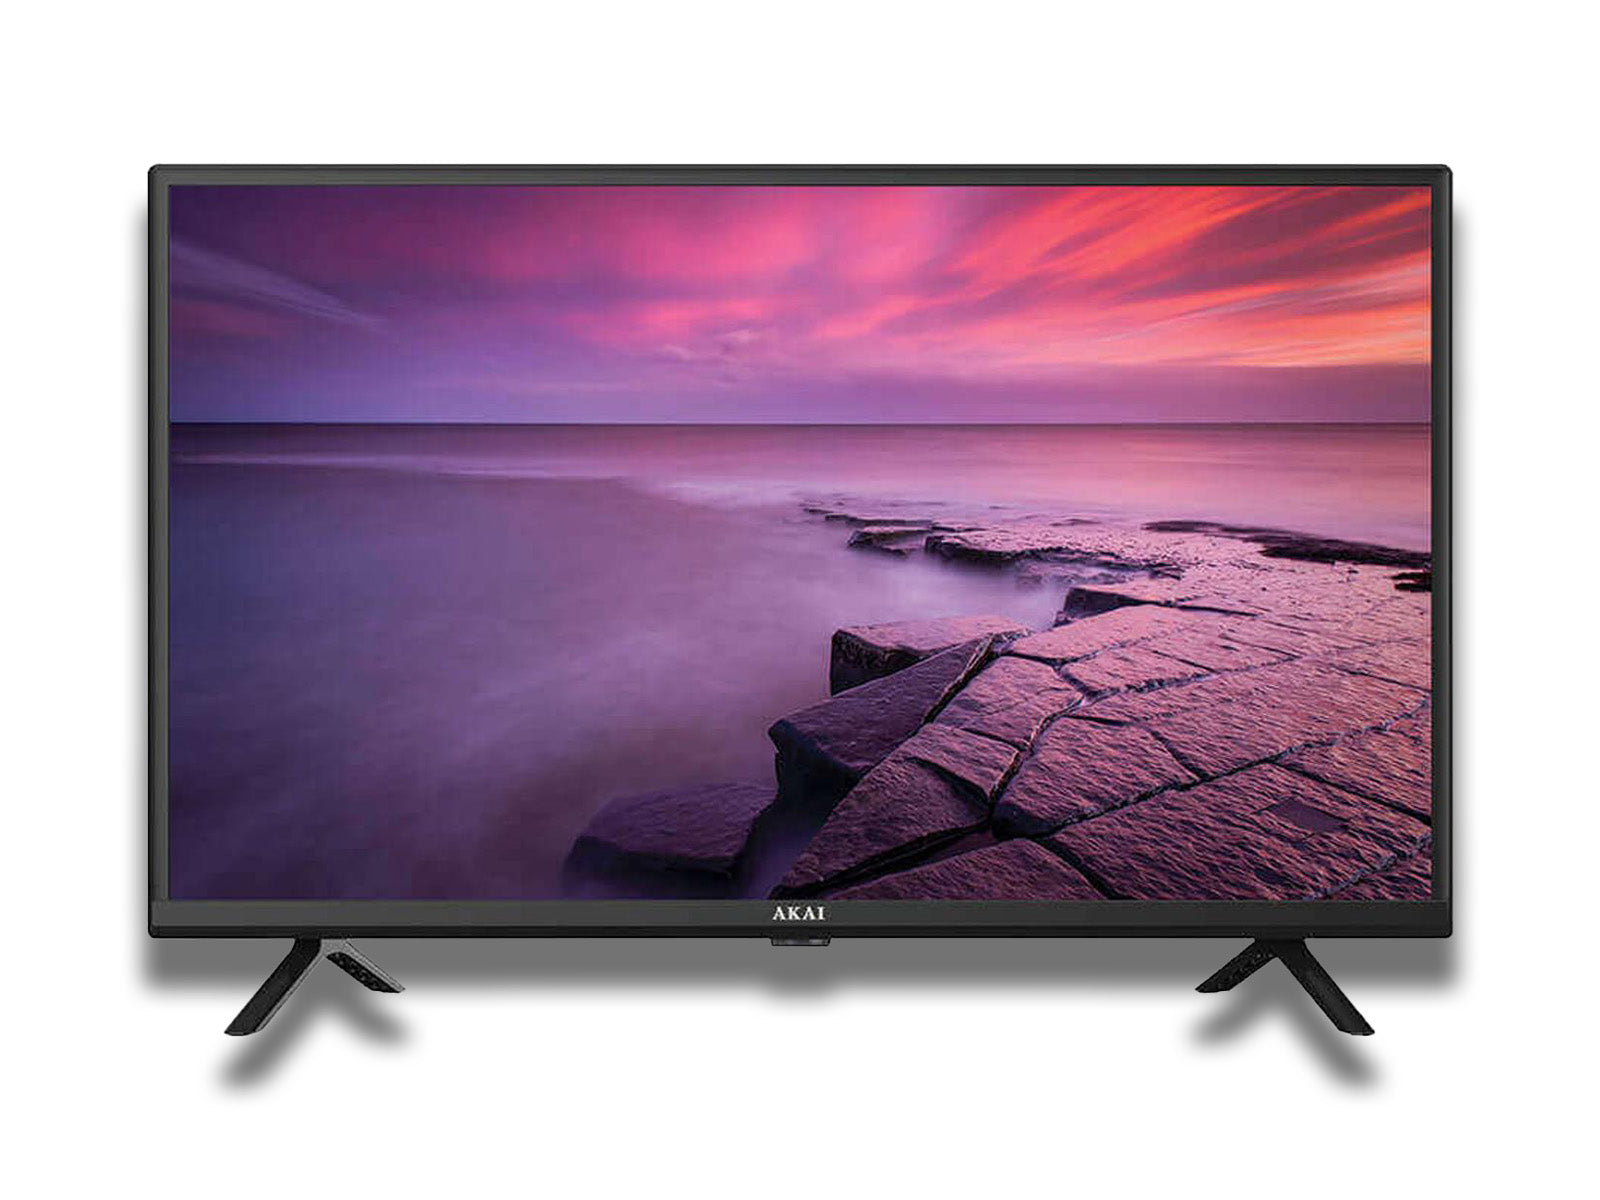 AKAI 32 inch HD Ready Smart TV